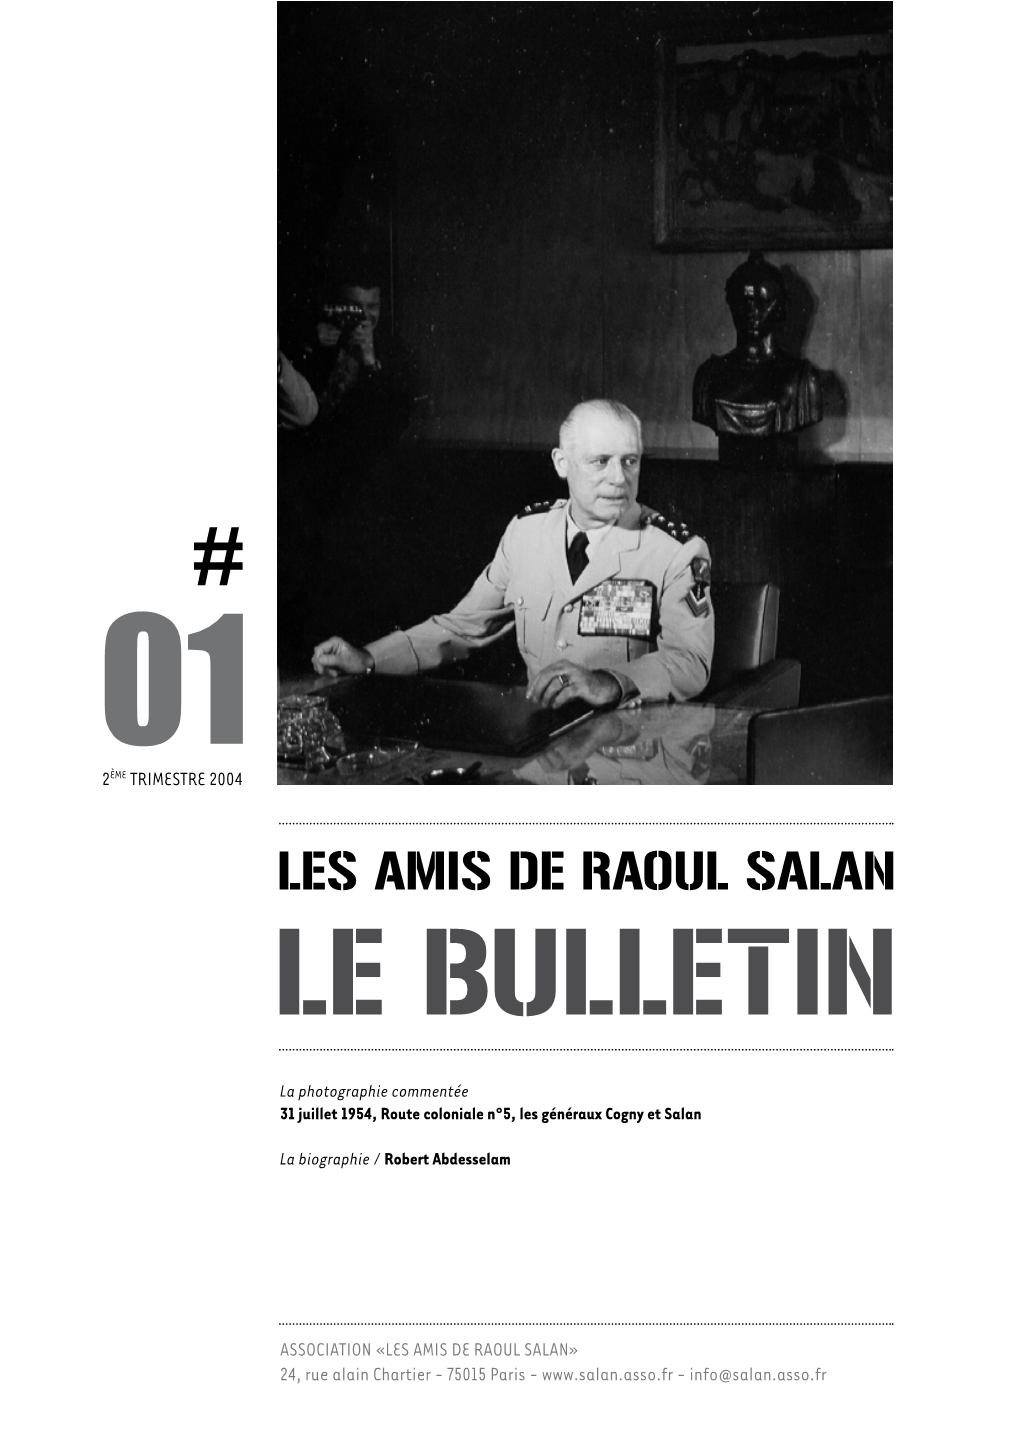 Bulletin 01 / 2Eme Trimestre 2004